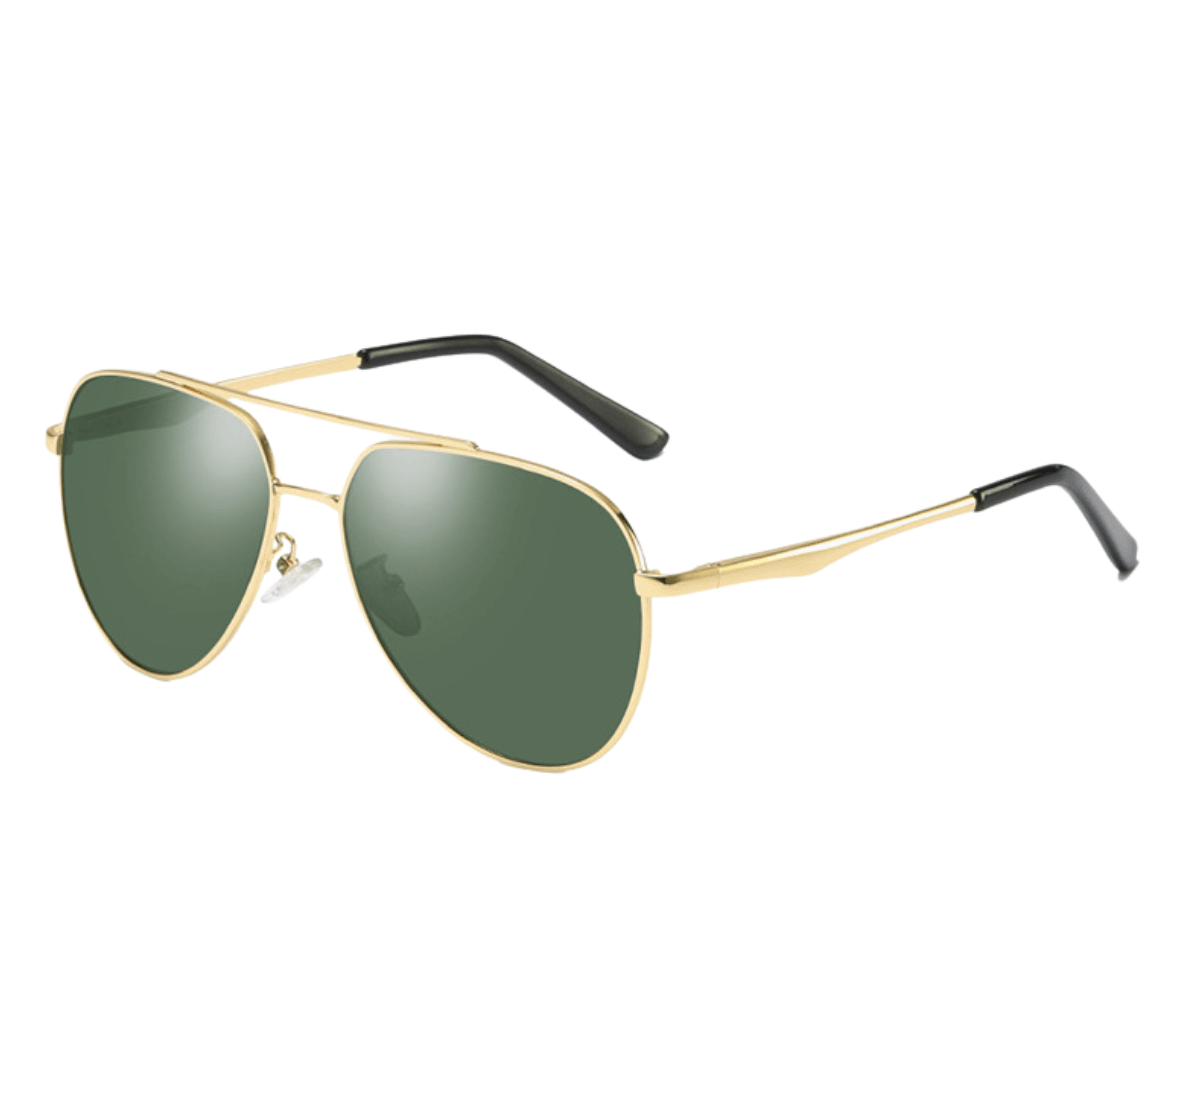 custom aviator sunglasses, custom green aviator sunglasses, custom sunglasses manufacturers, custom sunglasses, Sunglasses Manufacturer, sunglasses supplier, sunglasses factory